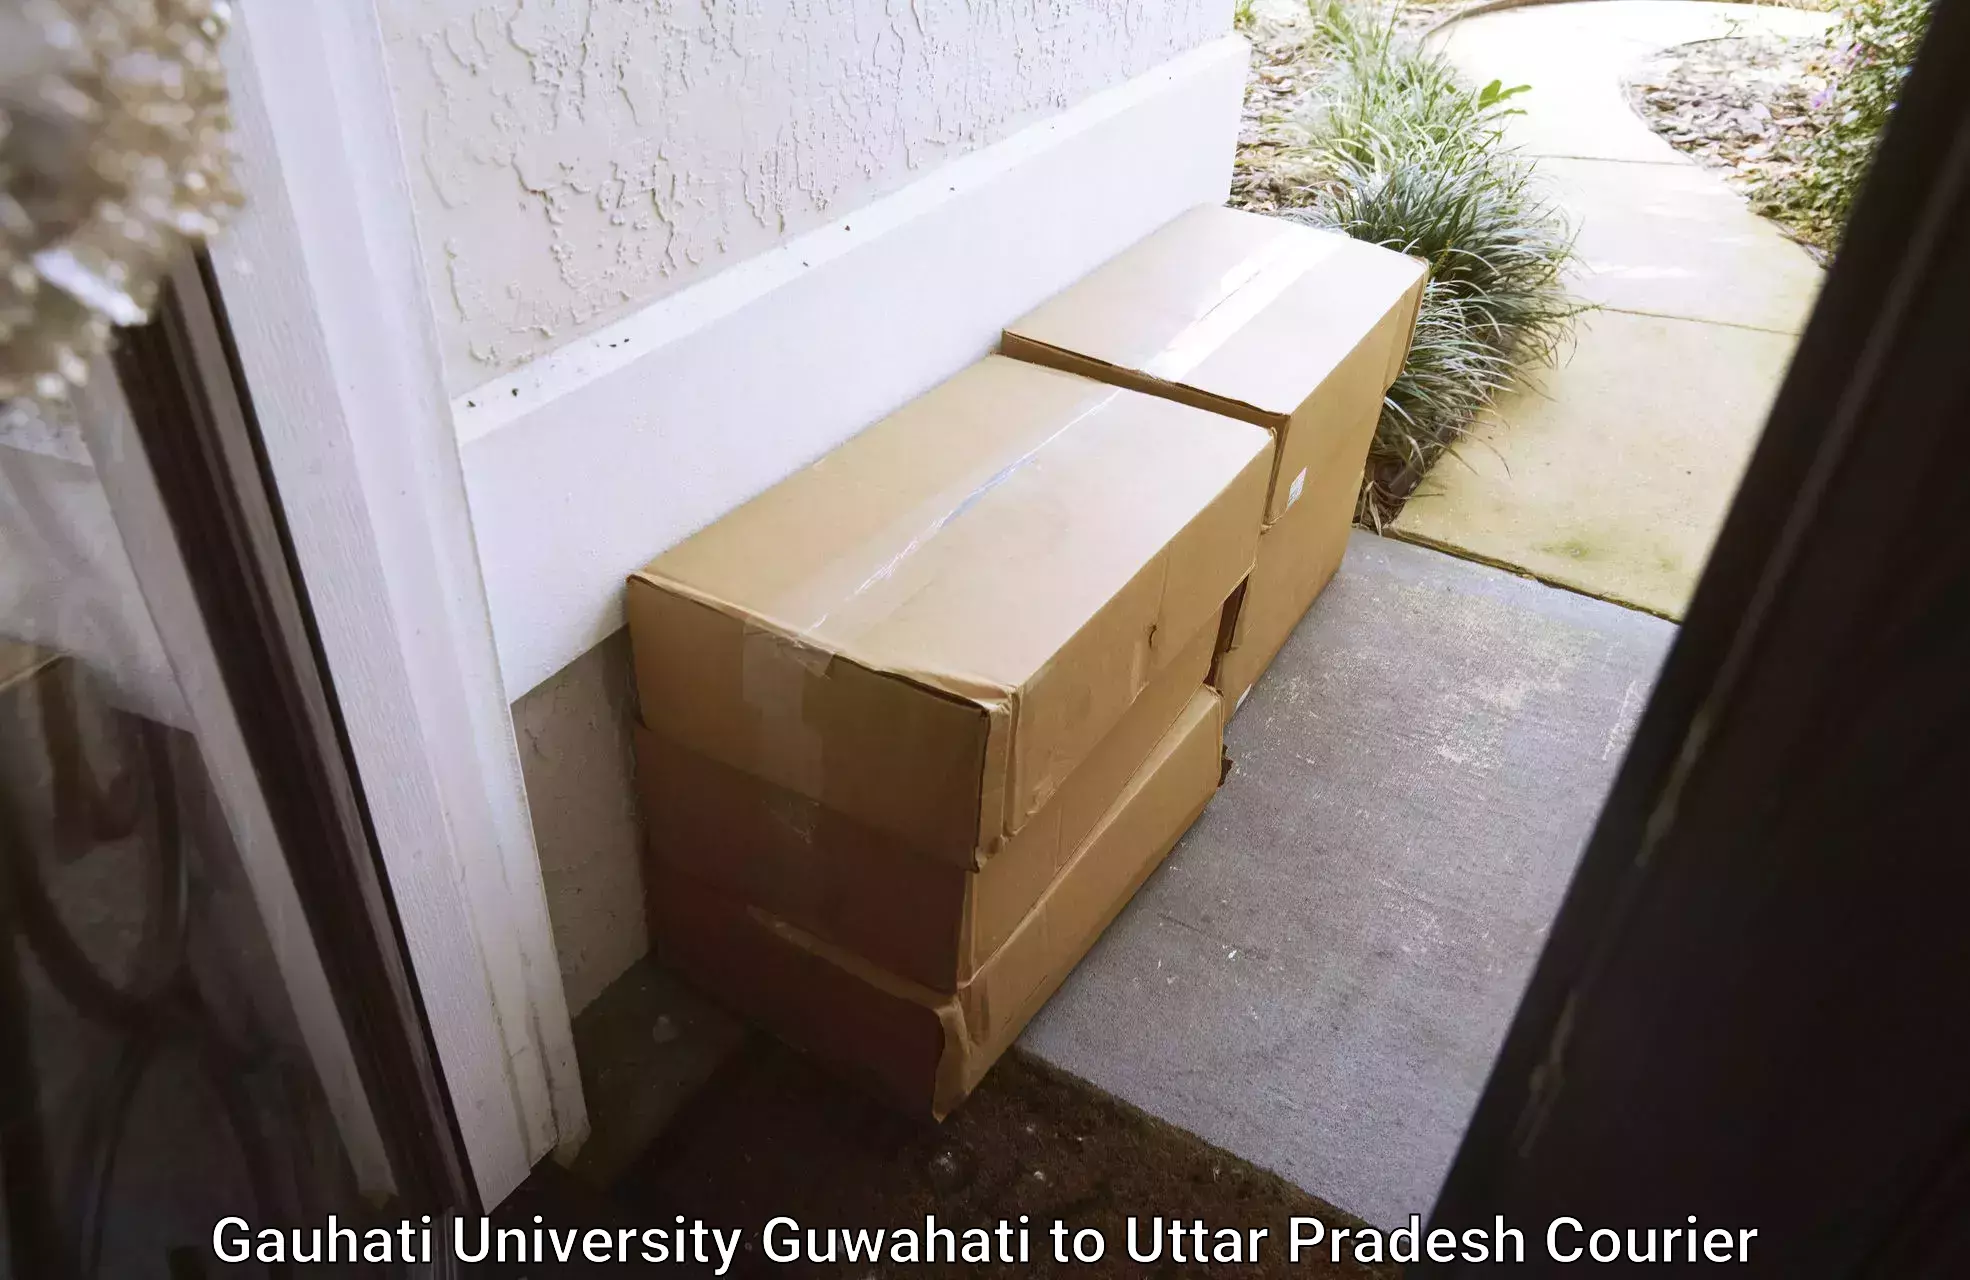 Dynamic courier operations Gauhati University Guwahati to Agra